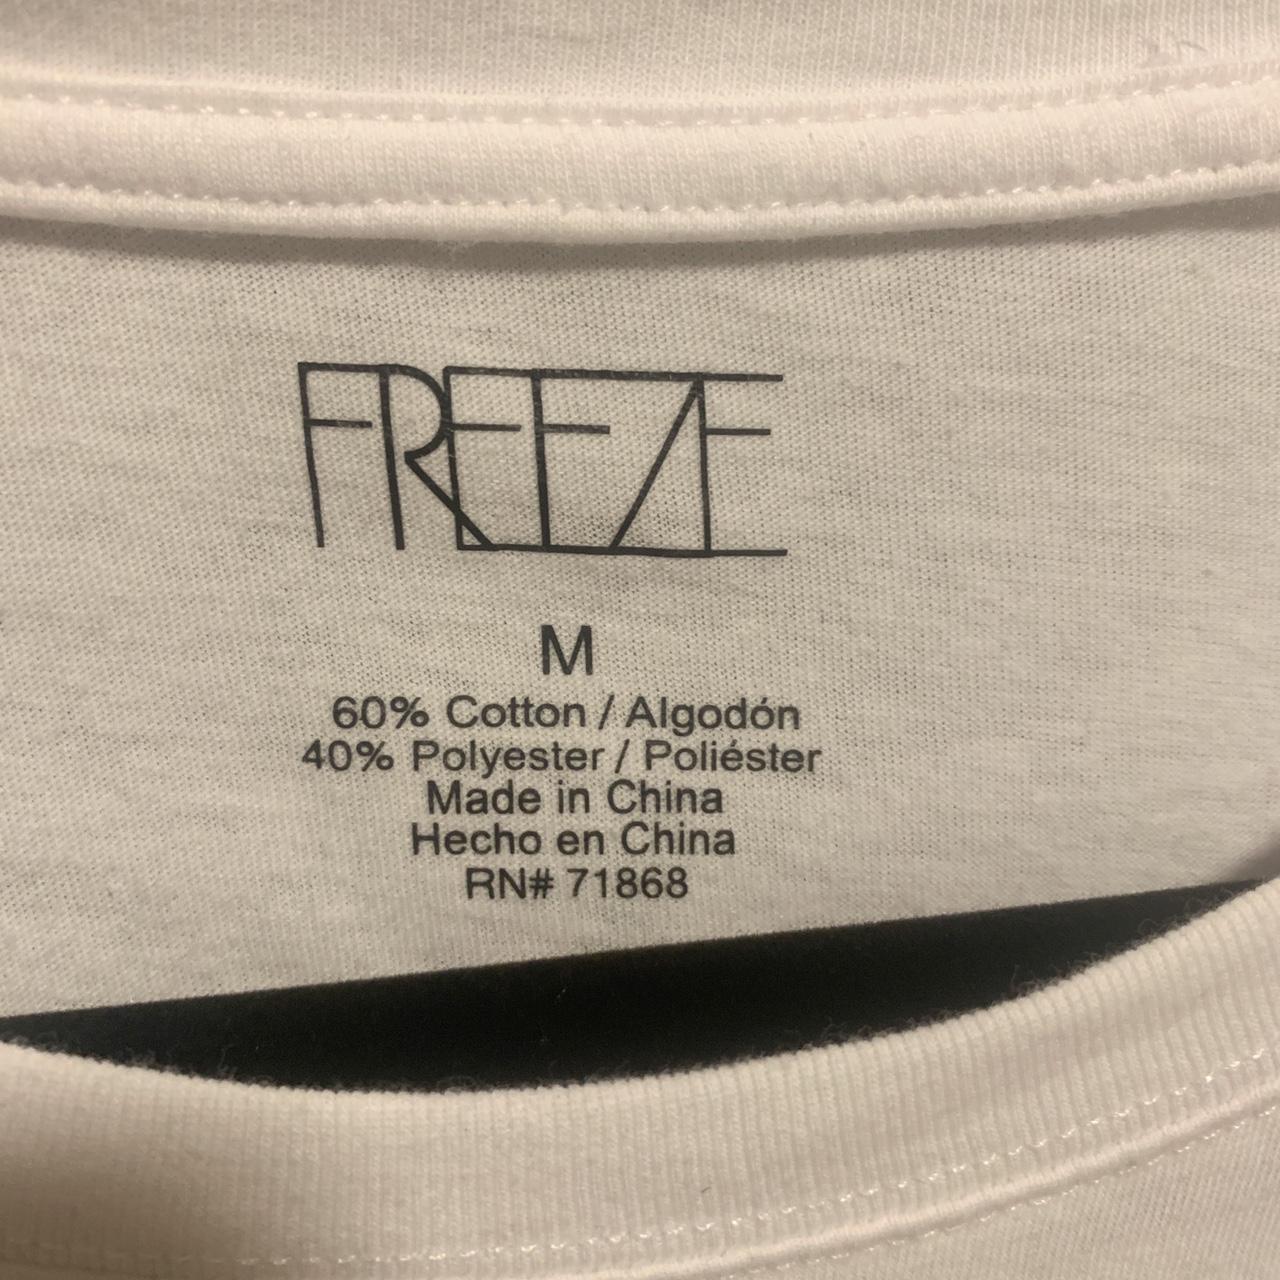 Freeze 24-7 Women's White and Black T-shirt (4)